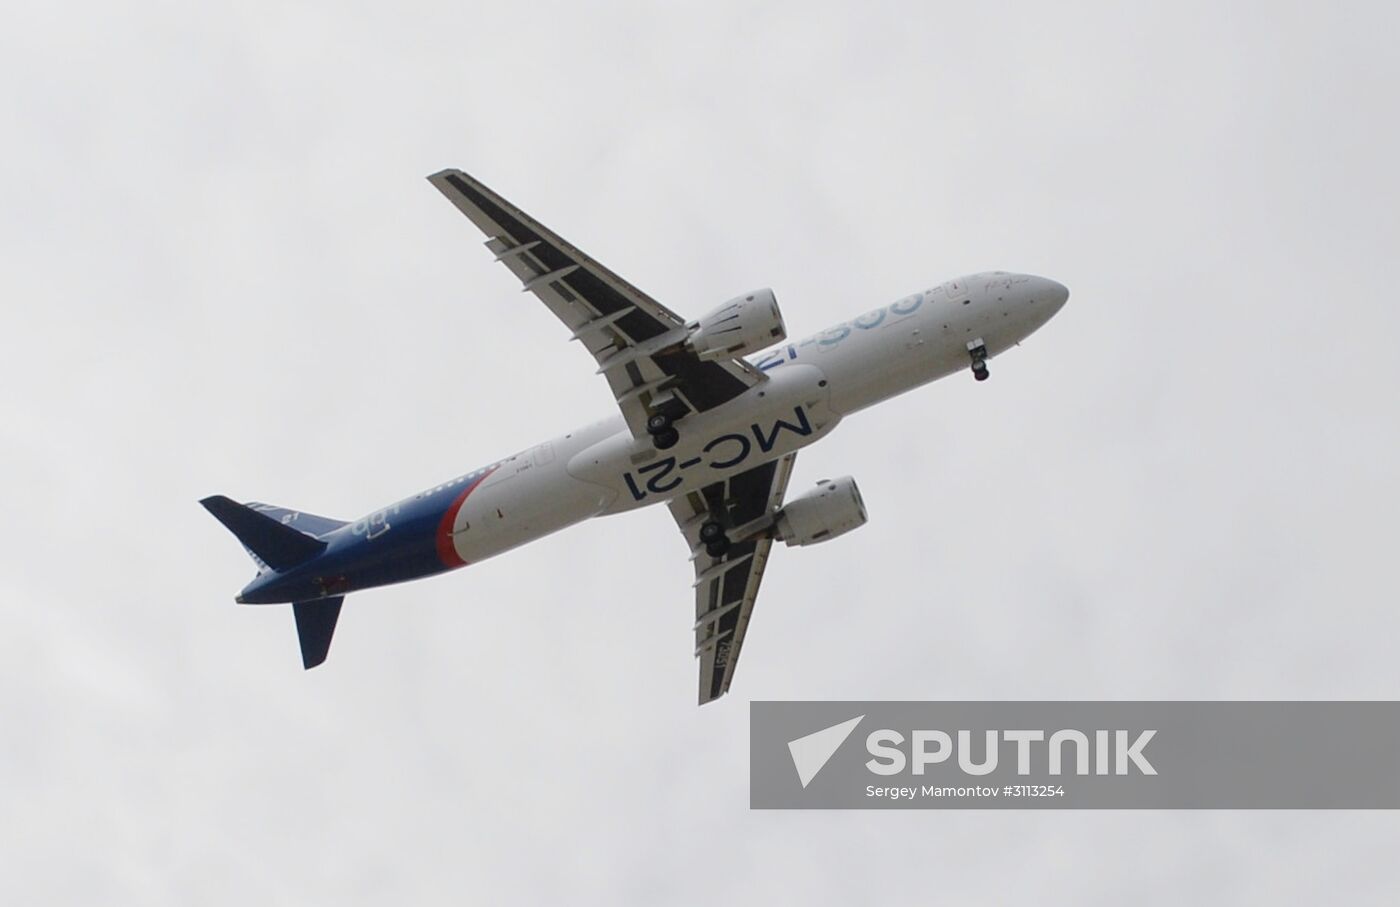 Russian MC21 passenger jet makes maiden flight